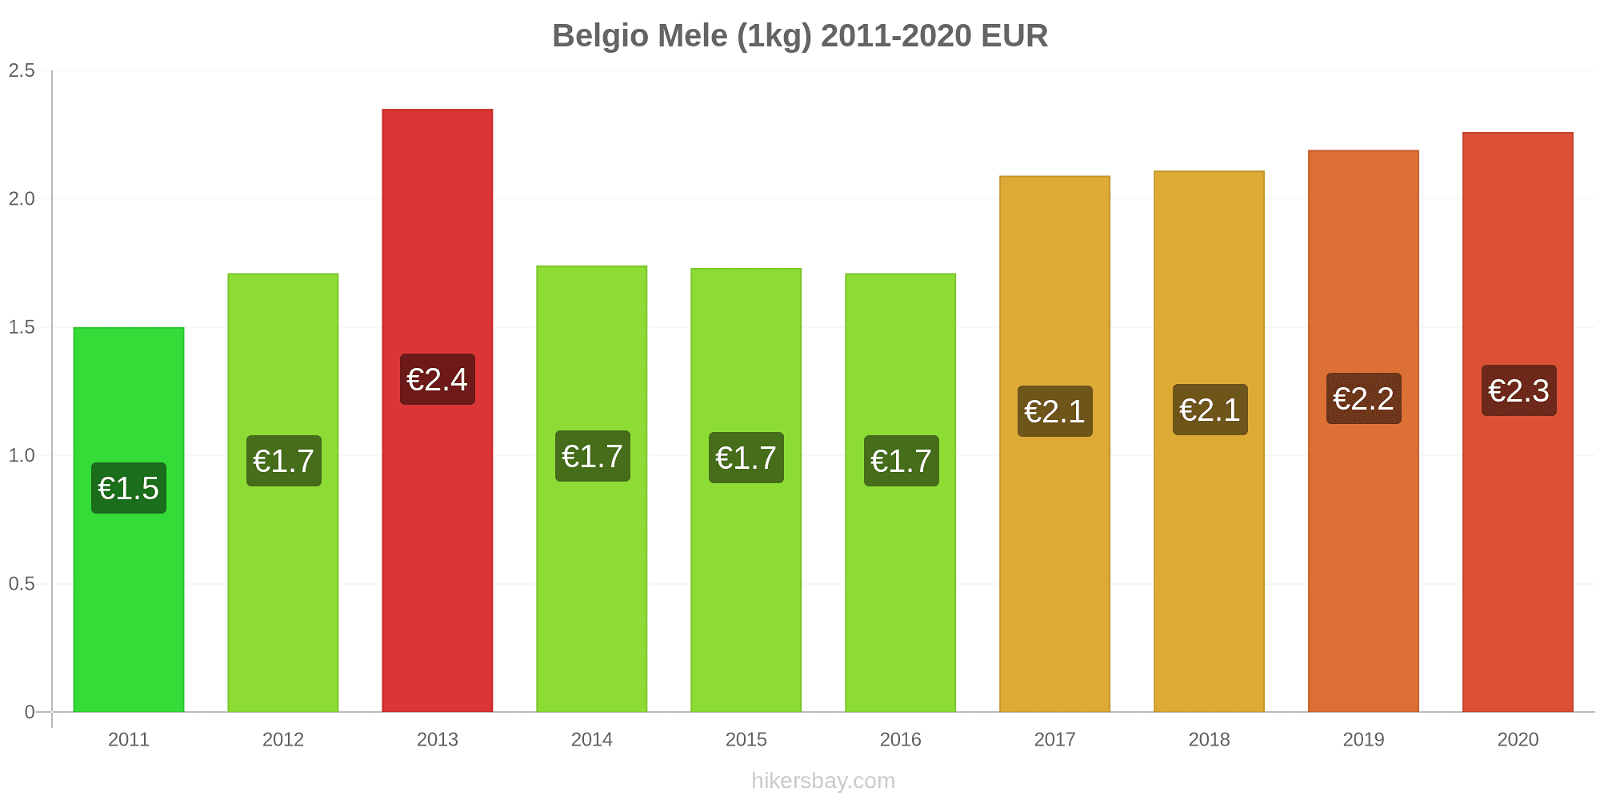 Belgio variazioni di prezzo Mele (1kg) hikersbay.com